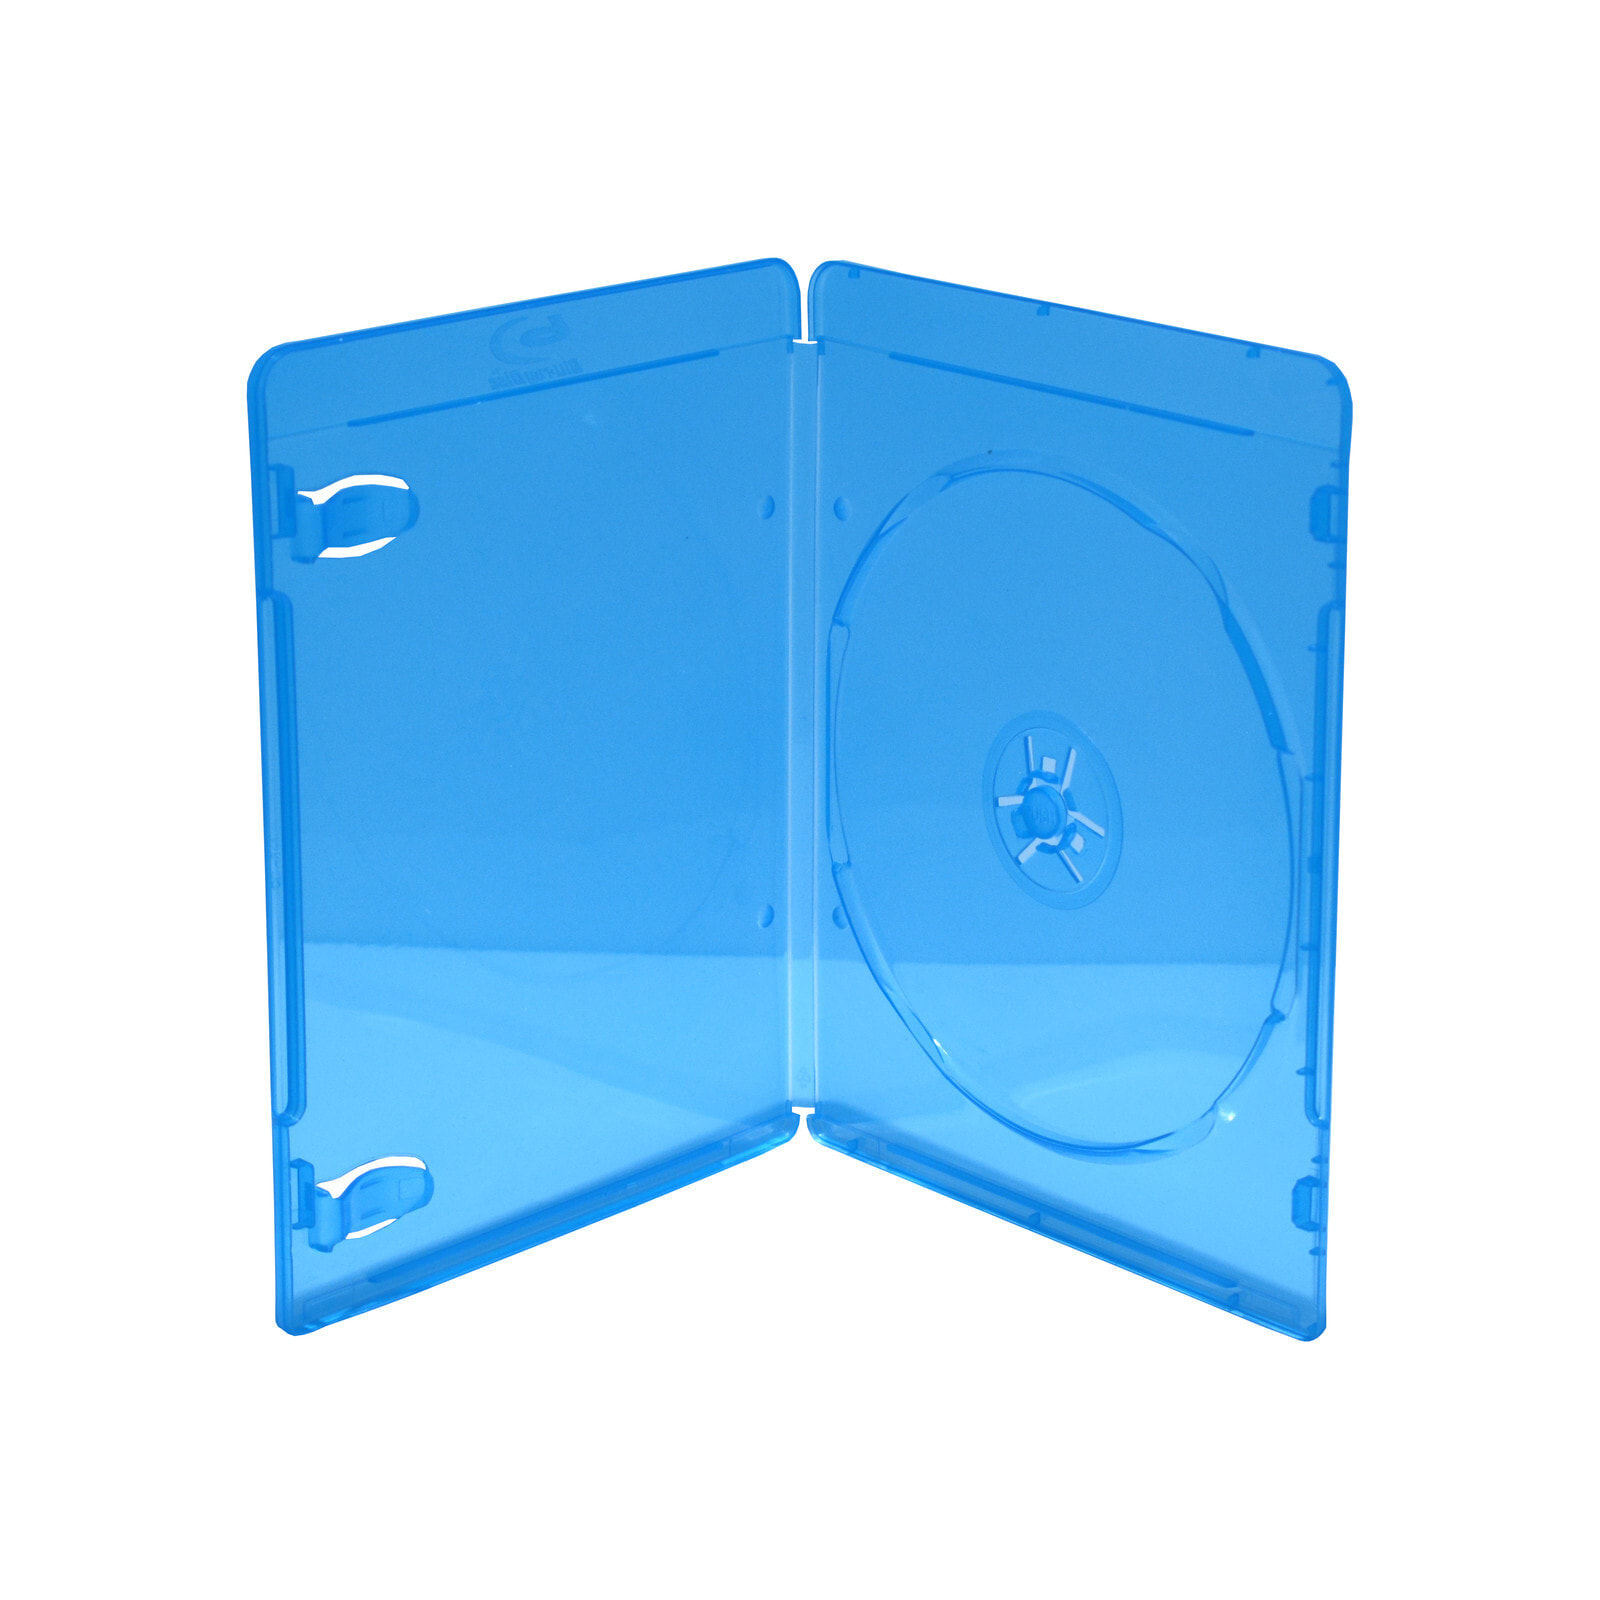 MediaRange BOX39-50 чехлы для оптических дисков Чехол для дисков Blu-ray 1 диск (ов) Синий, Прозрачный